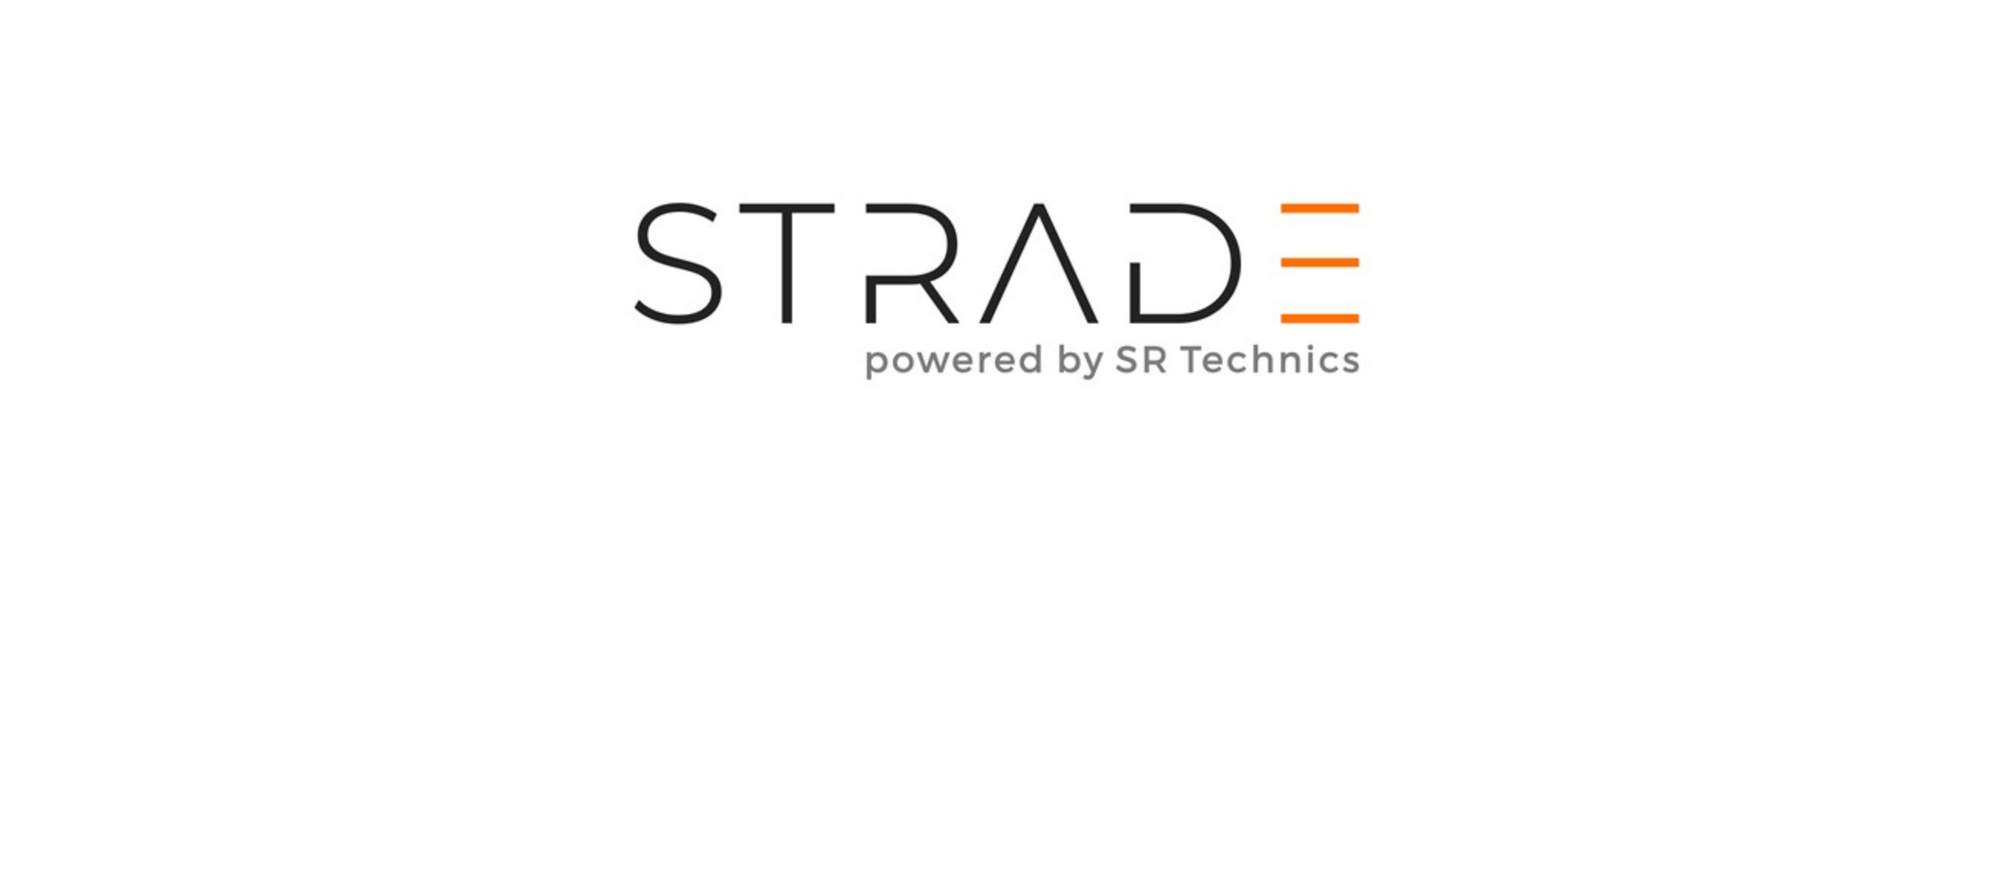 SR Technics launches its new brand STRADE